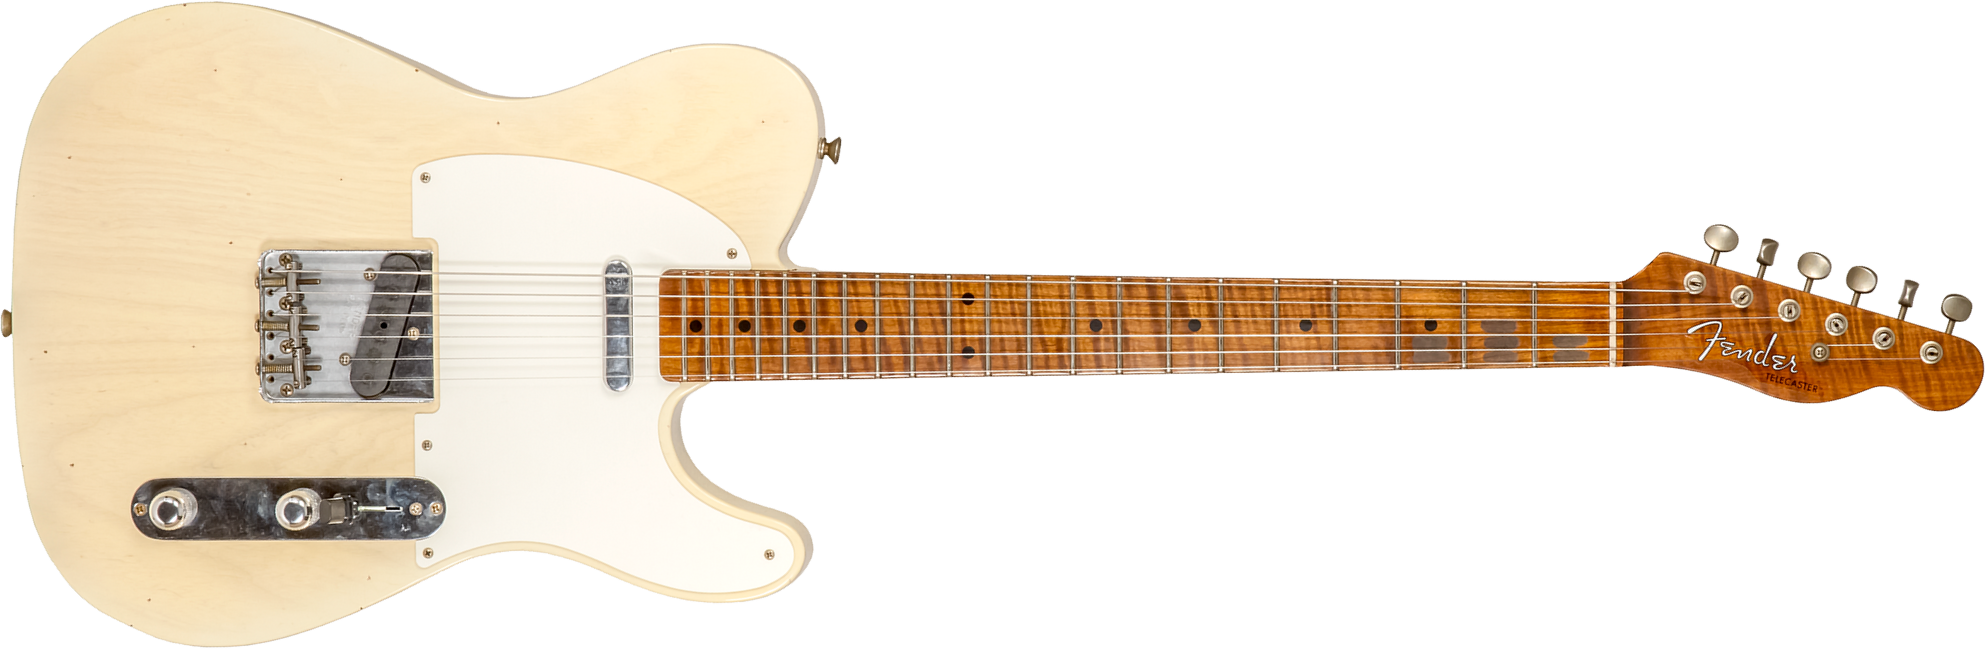 Fender Custom Shop Tele 1955 2s Ht Mn #cz573416 - Journeyman Relic Nocaster Blonde - Guitarra eléctrica con forma de tel - Main picture